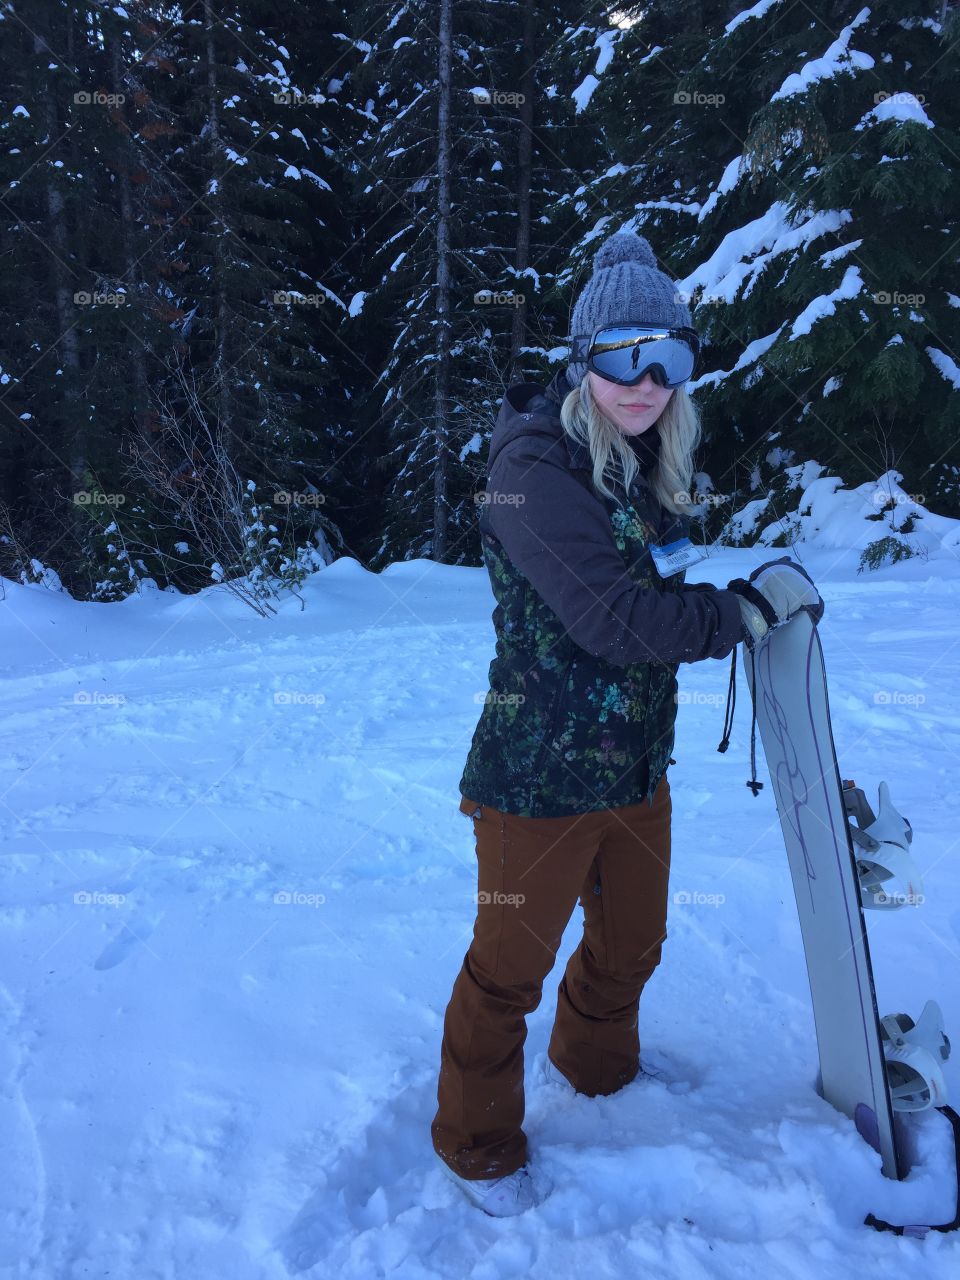 Snow, Winter, Cold, Recreation, Skier